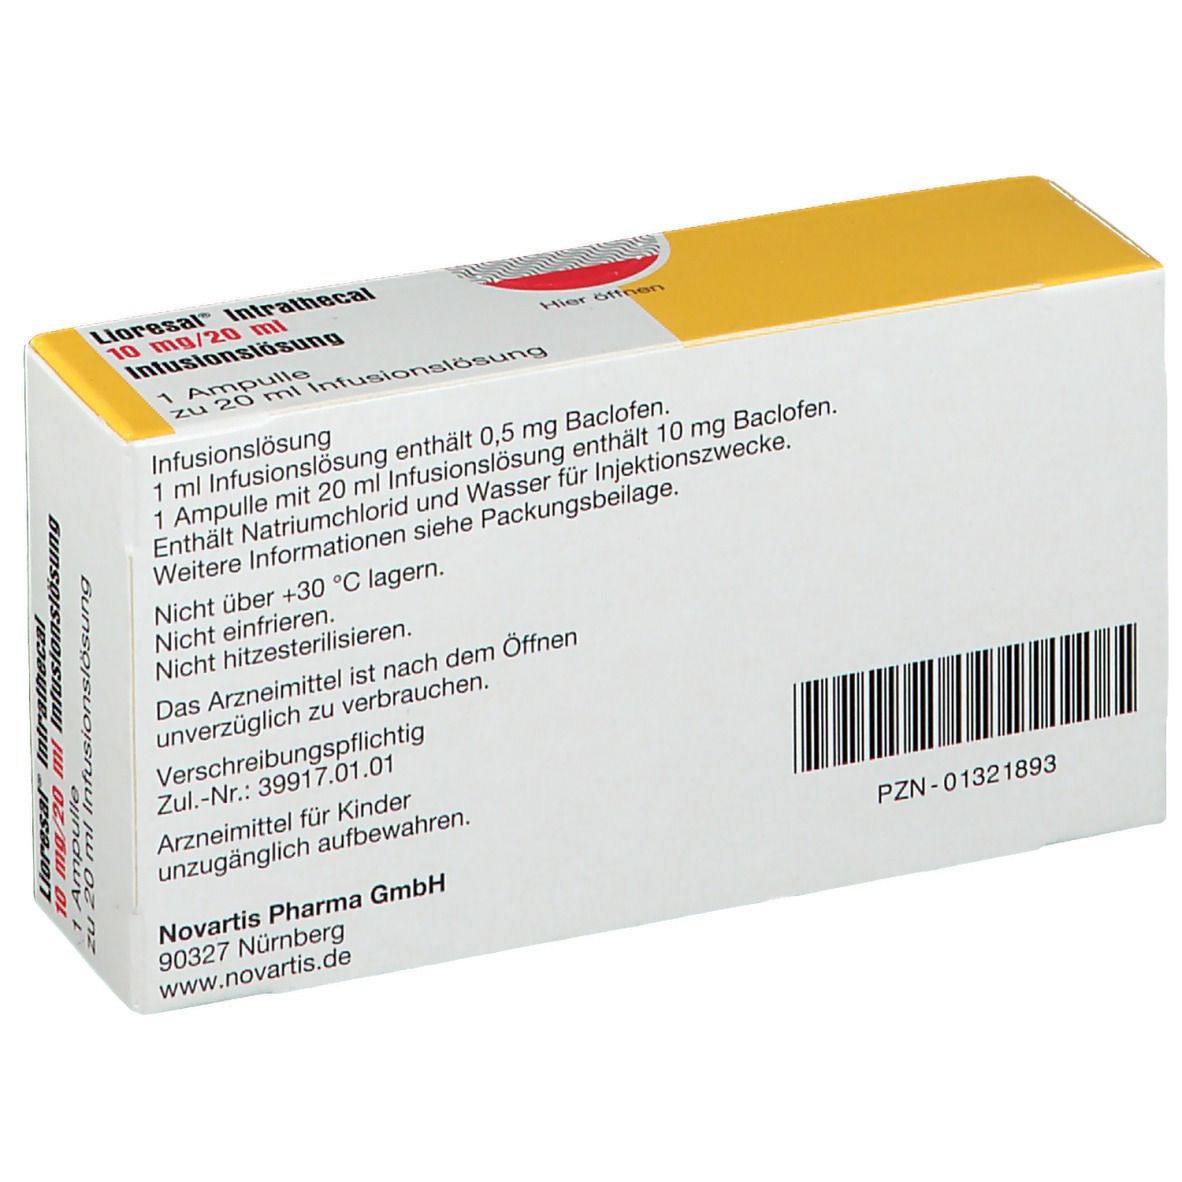 Lioresal® Intrathecal 10 mg